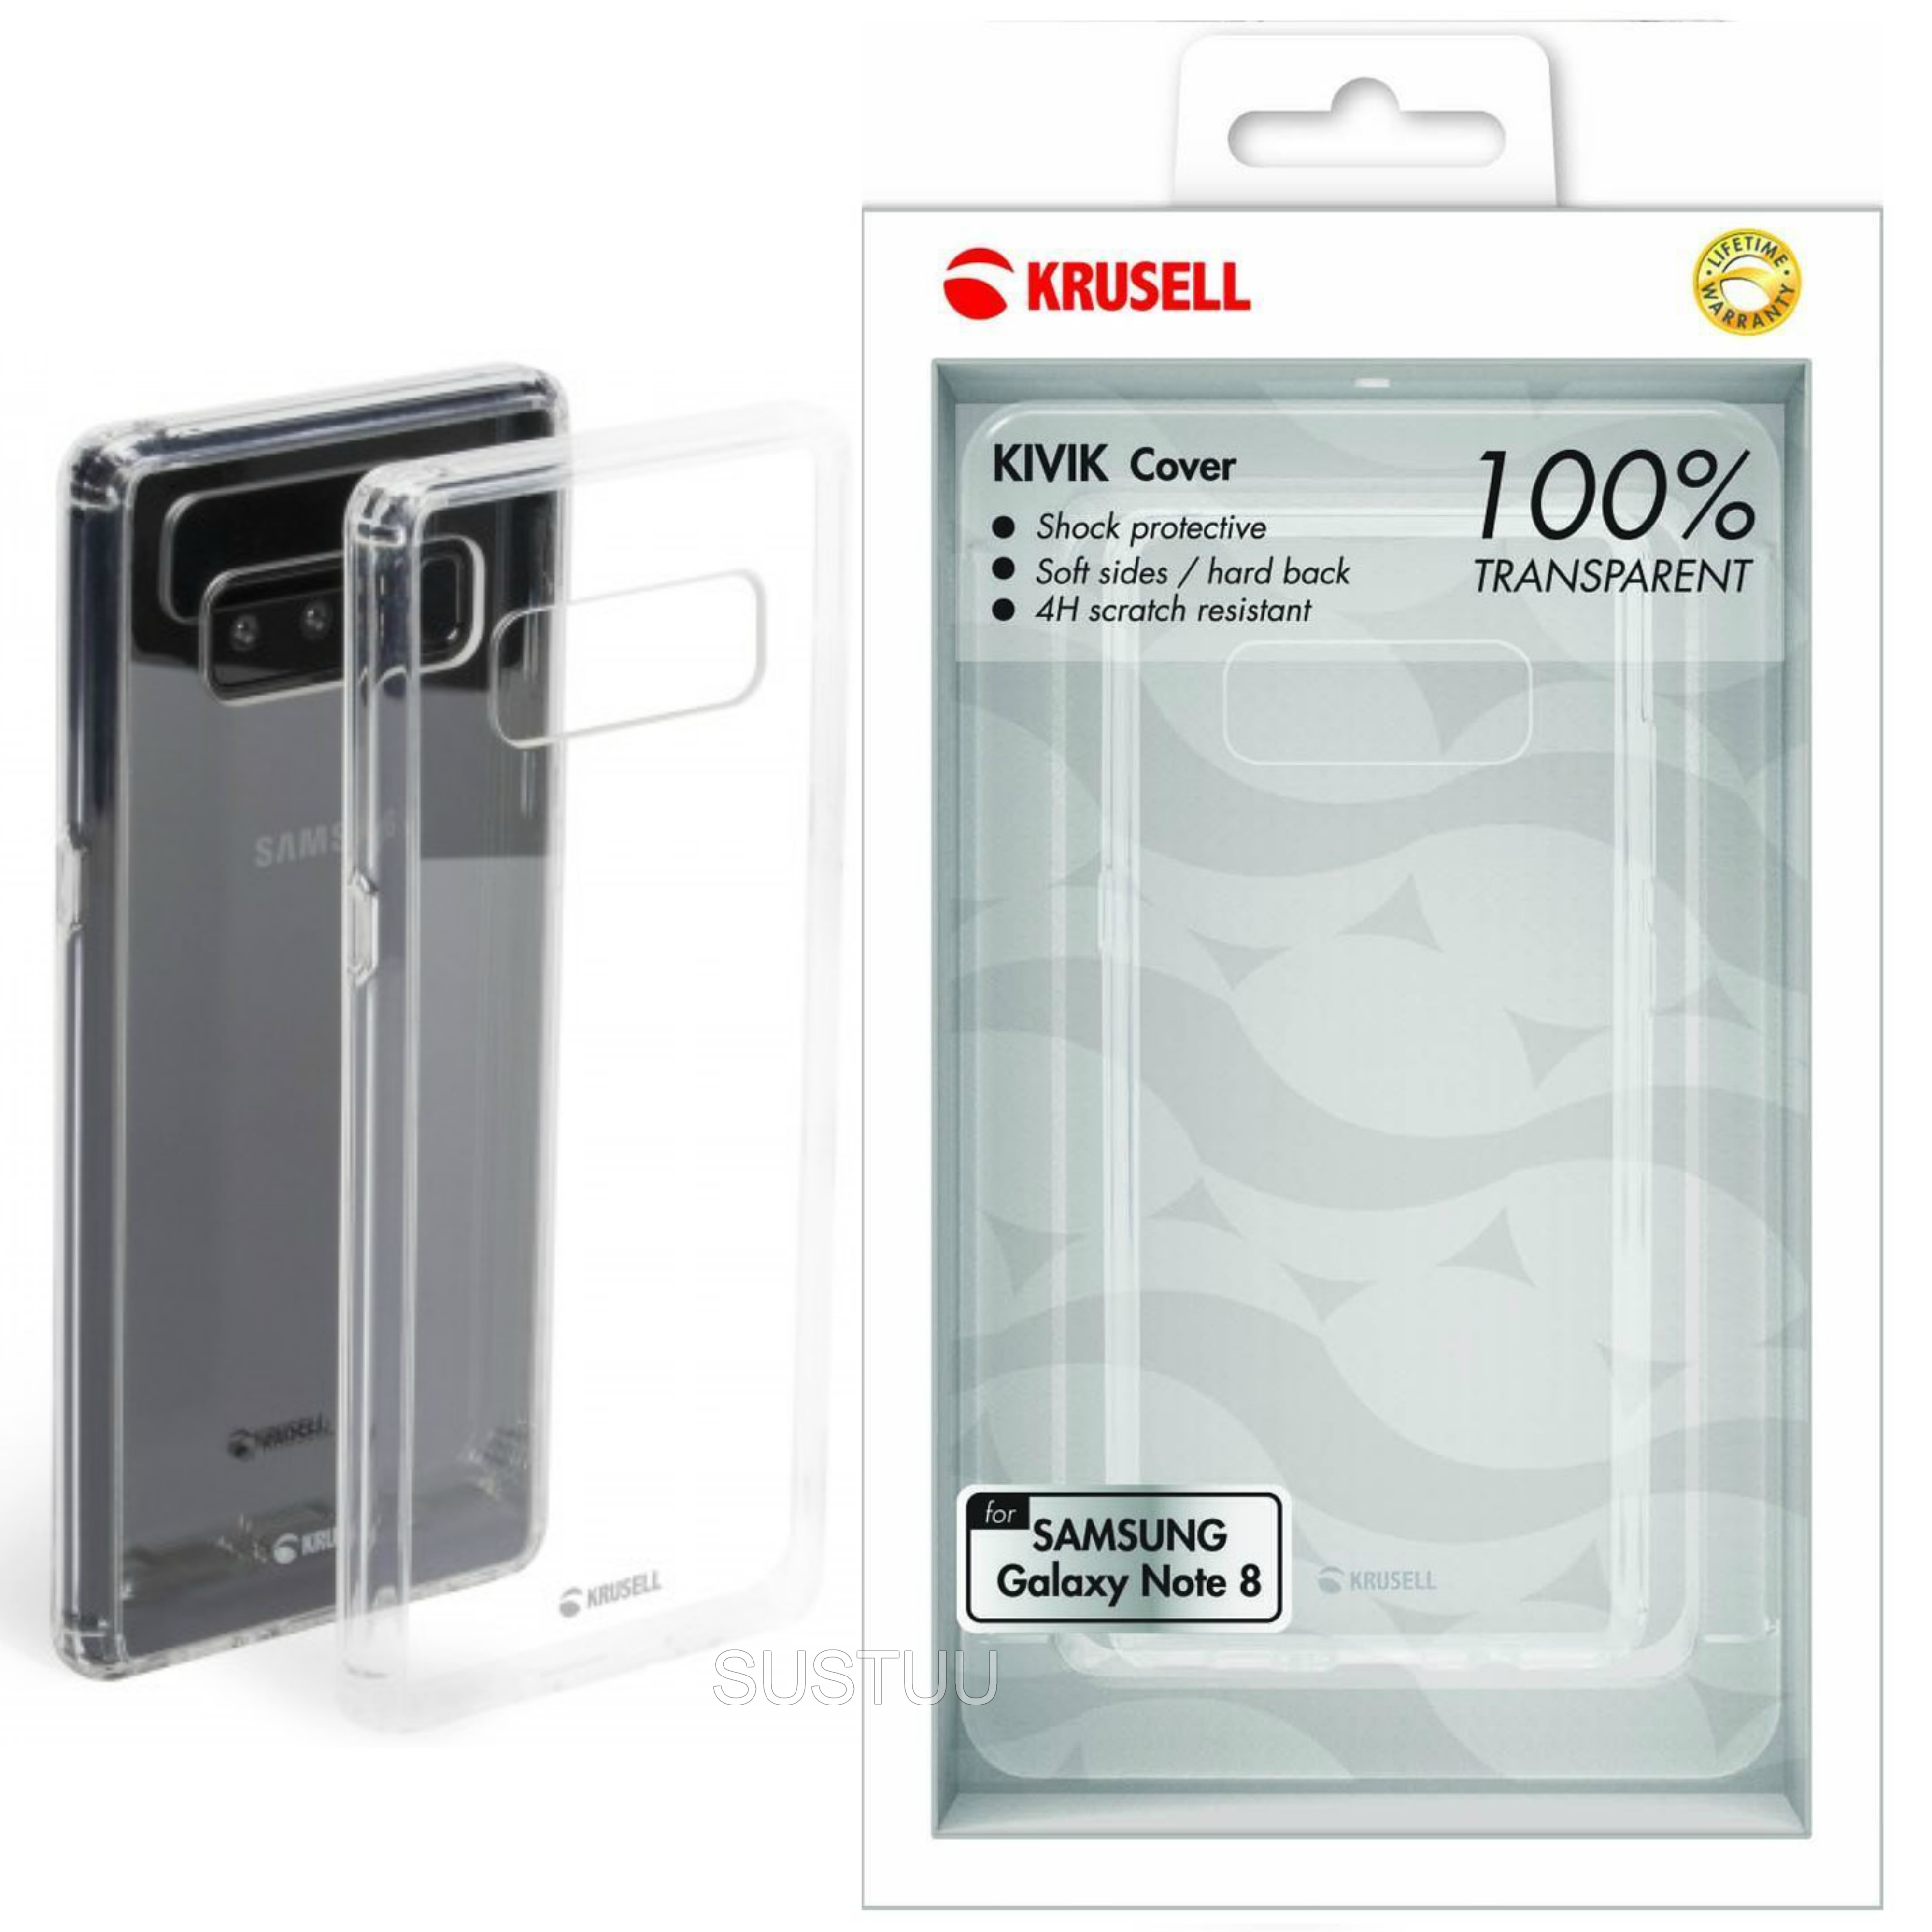 Etui KRUSELL Kivik Cover transparentne 61260  Samsung Galaxy S9